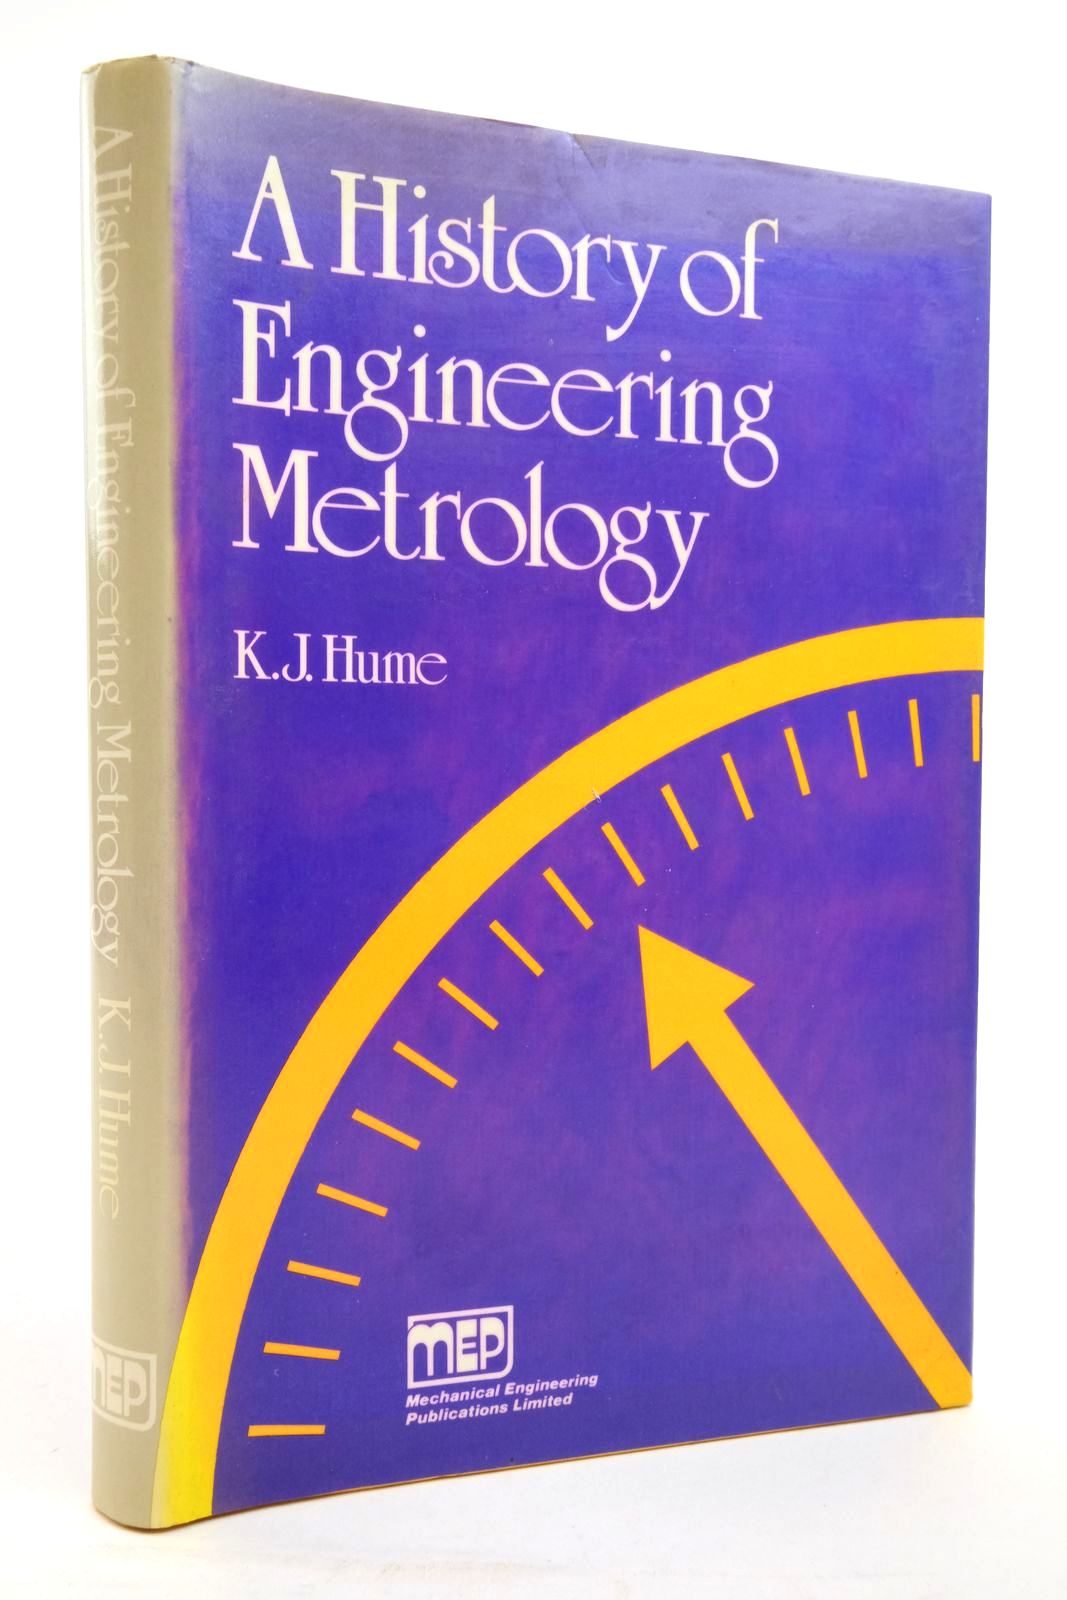 A History of Engineering Metrology